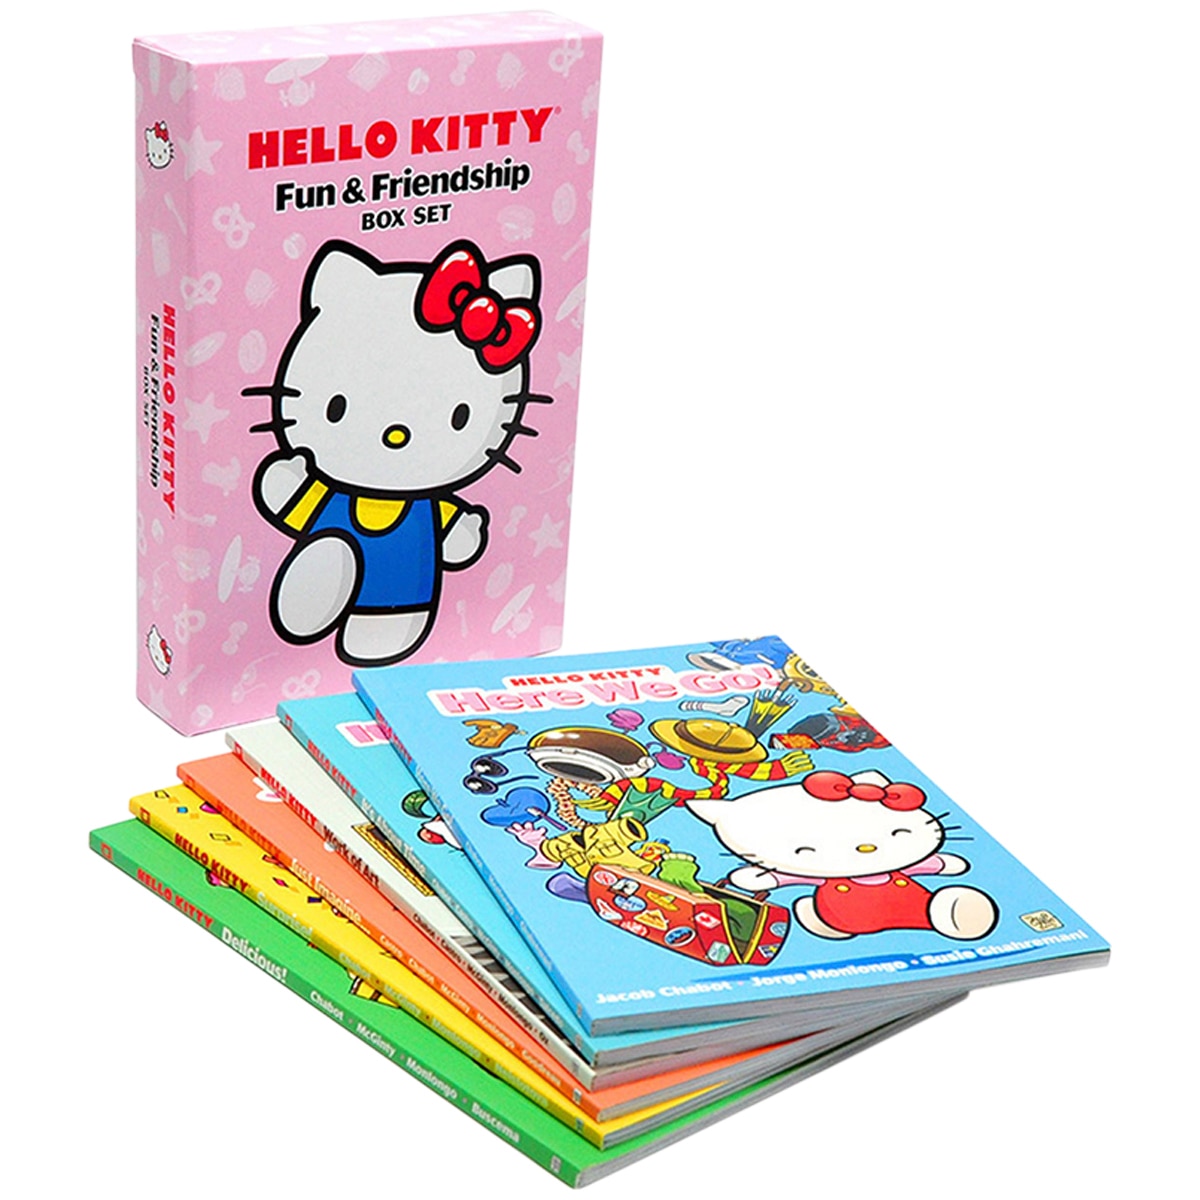 Hello Kitty Fun & Friendship Box Set